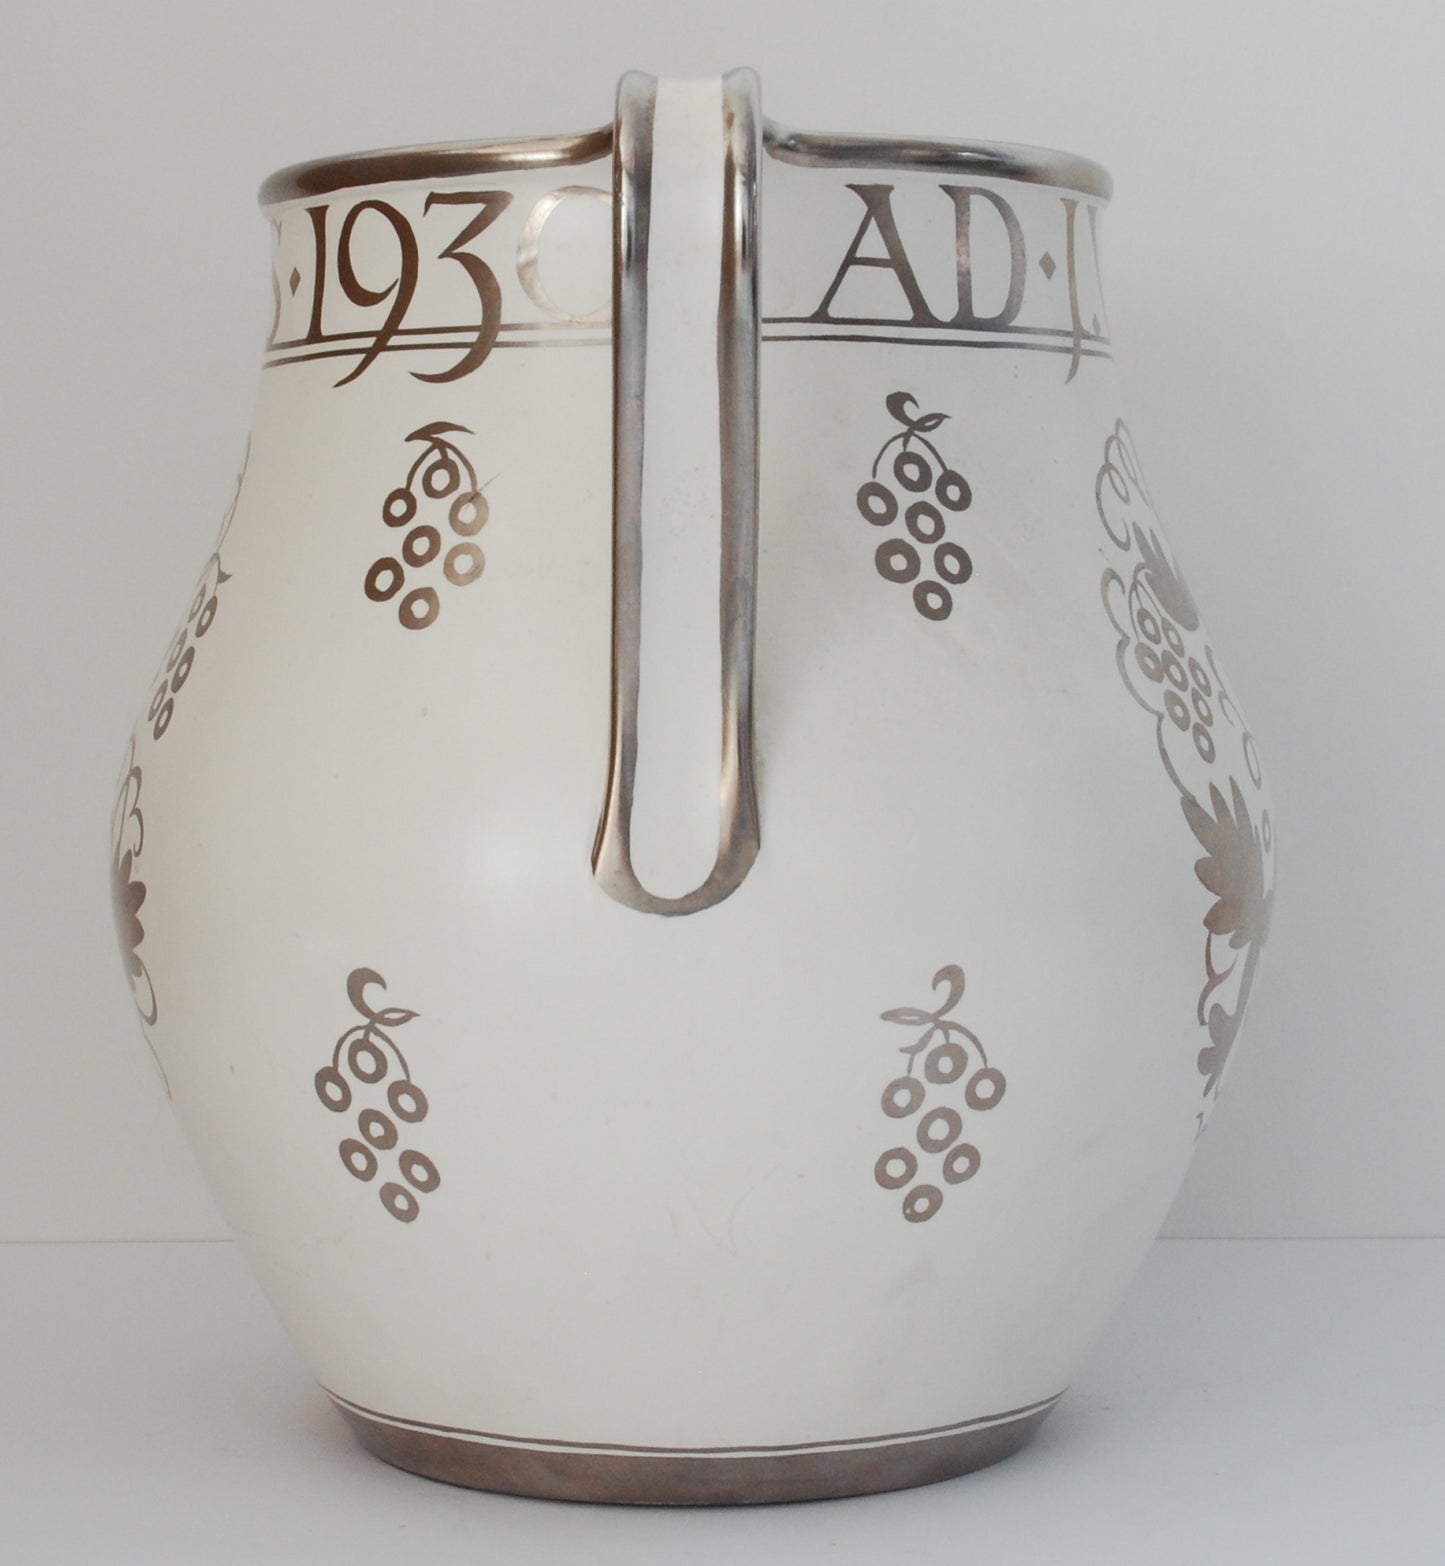 Bicentenary vase